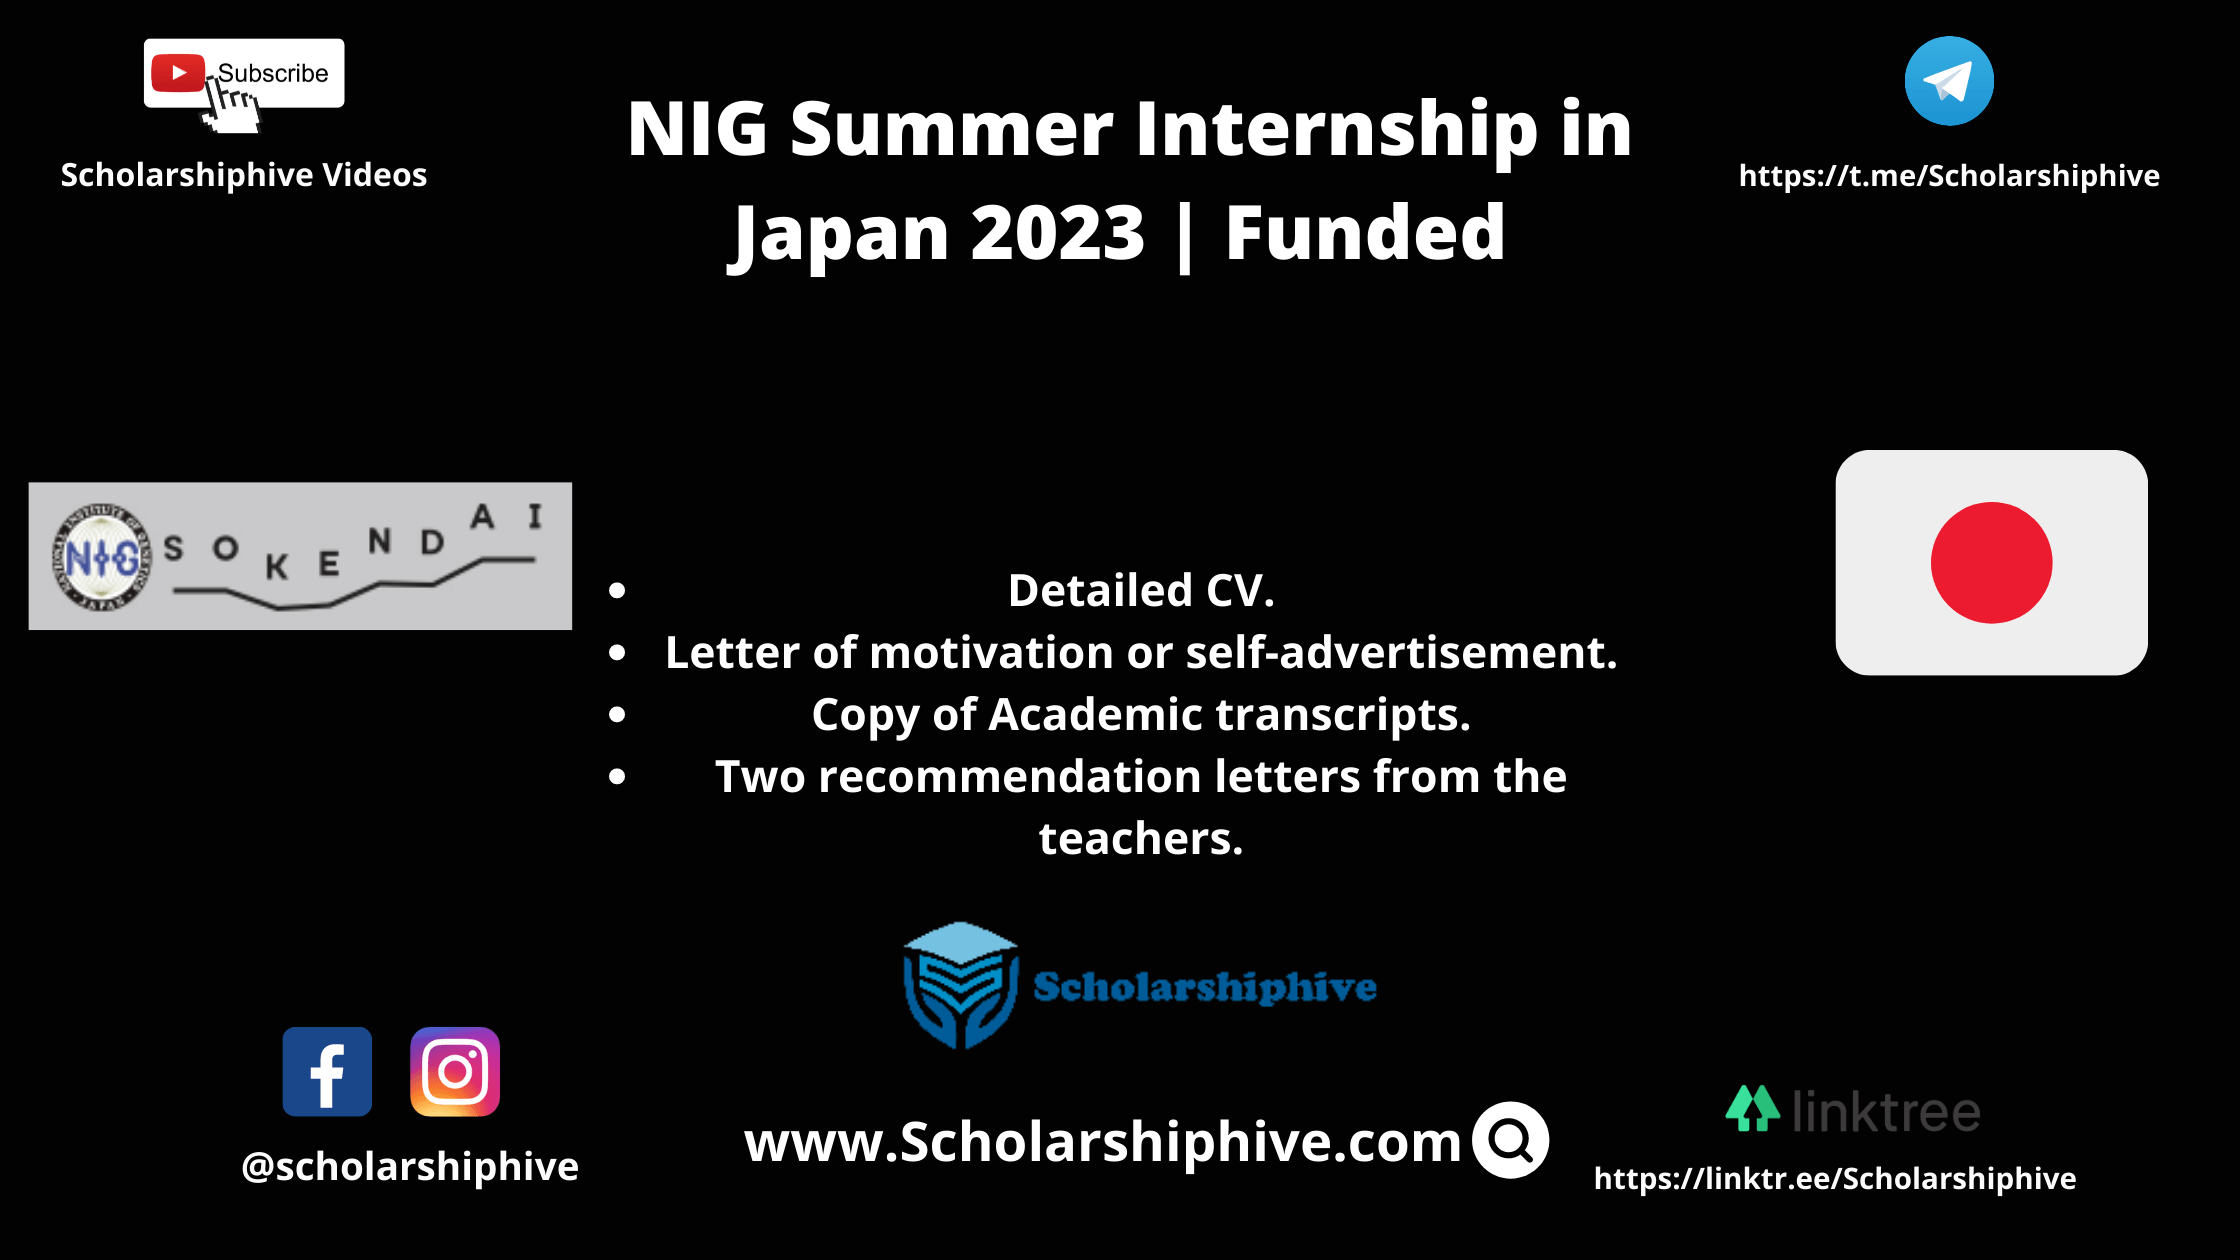 NIG Summer Internship in Japan 2023 Funded Scholarshiphive